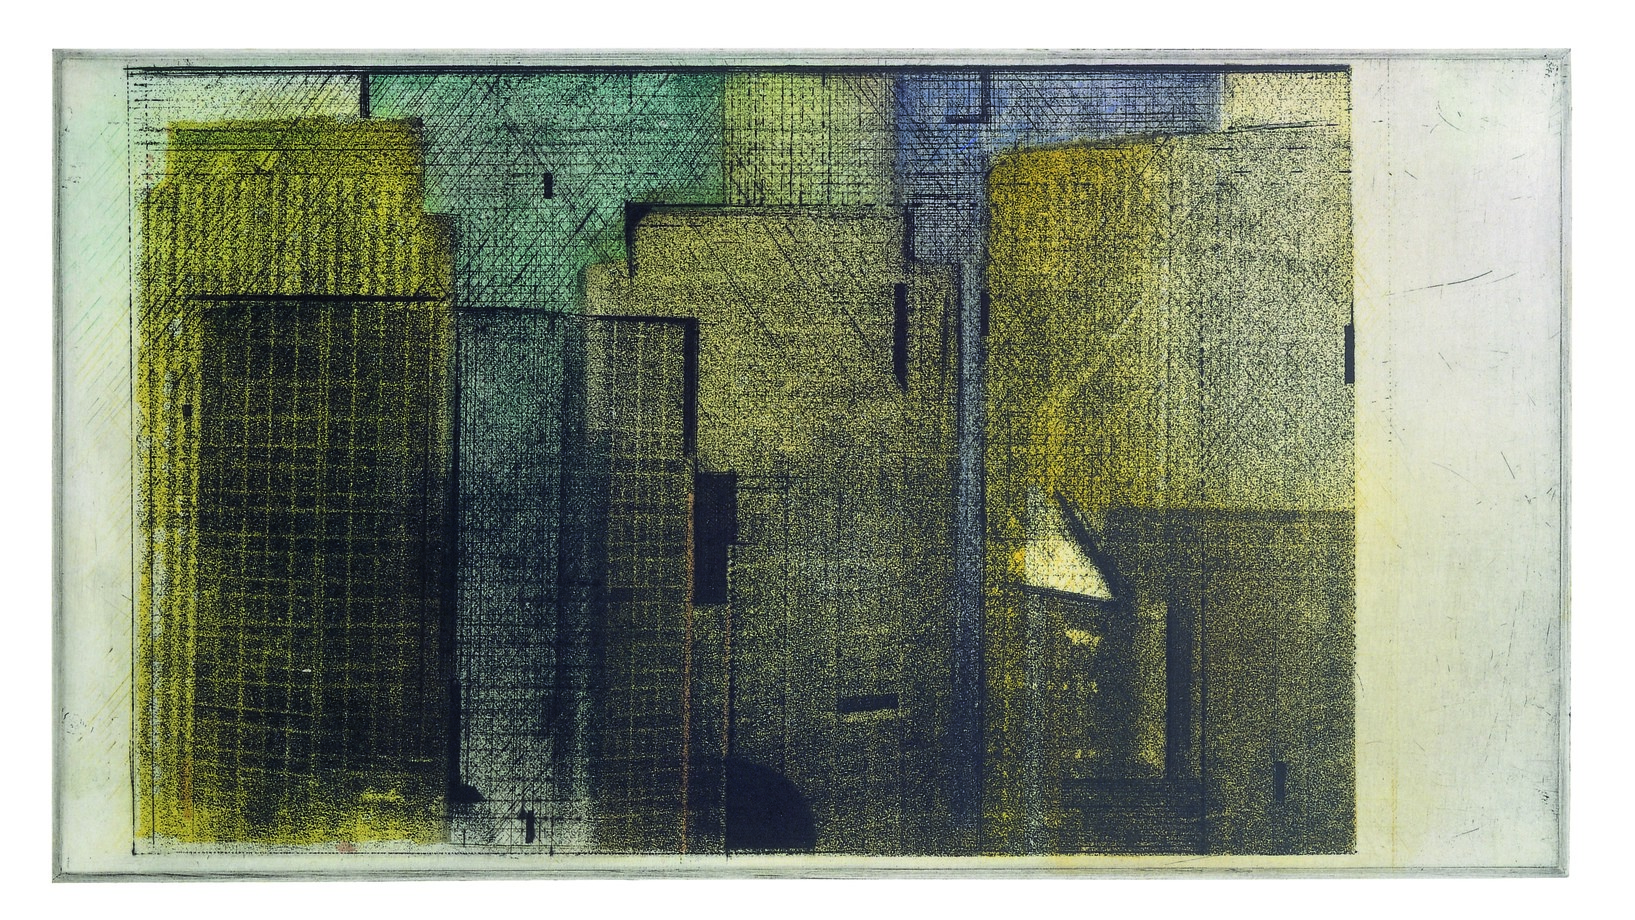 Walls – Transparent View, 1991-1994
Farbradierung, Fotogravure, Aquatinta, Kaltnadel; aquarelliert
275x500 mm © Pravoslav Sovak